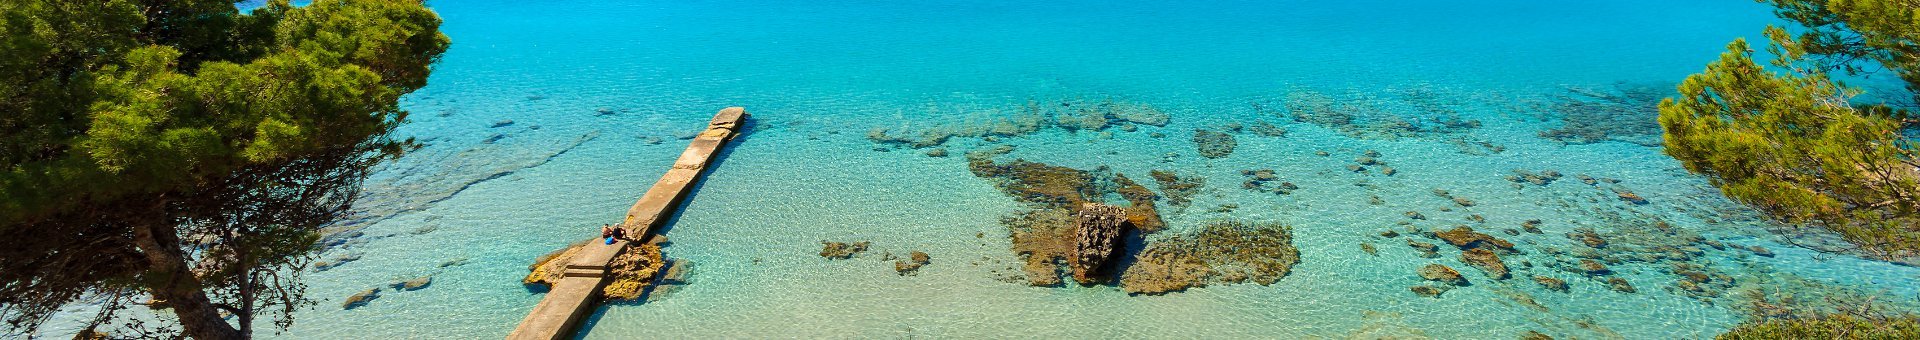 Badehinweise für Mallorca